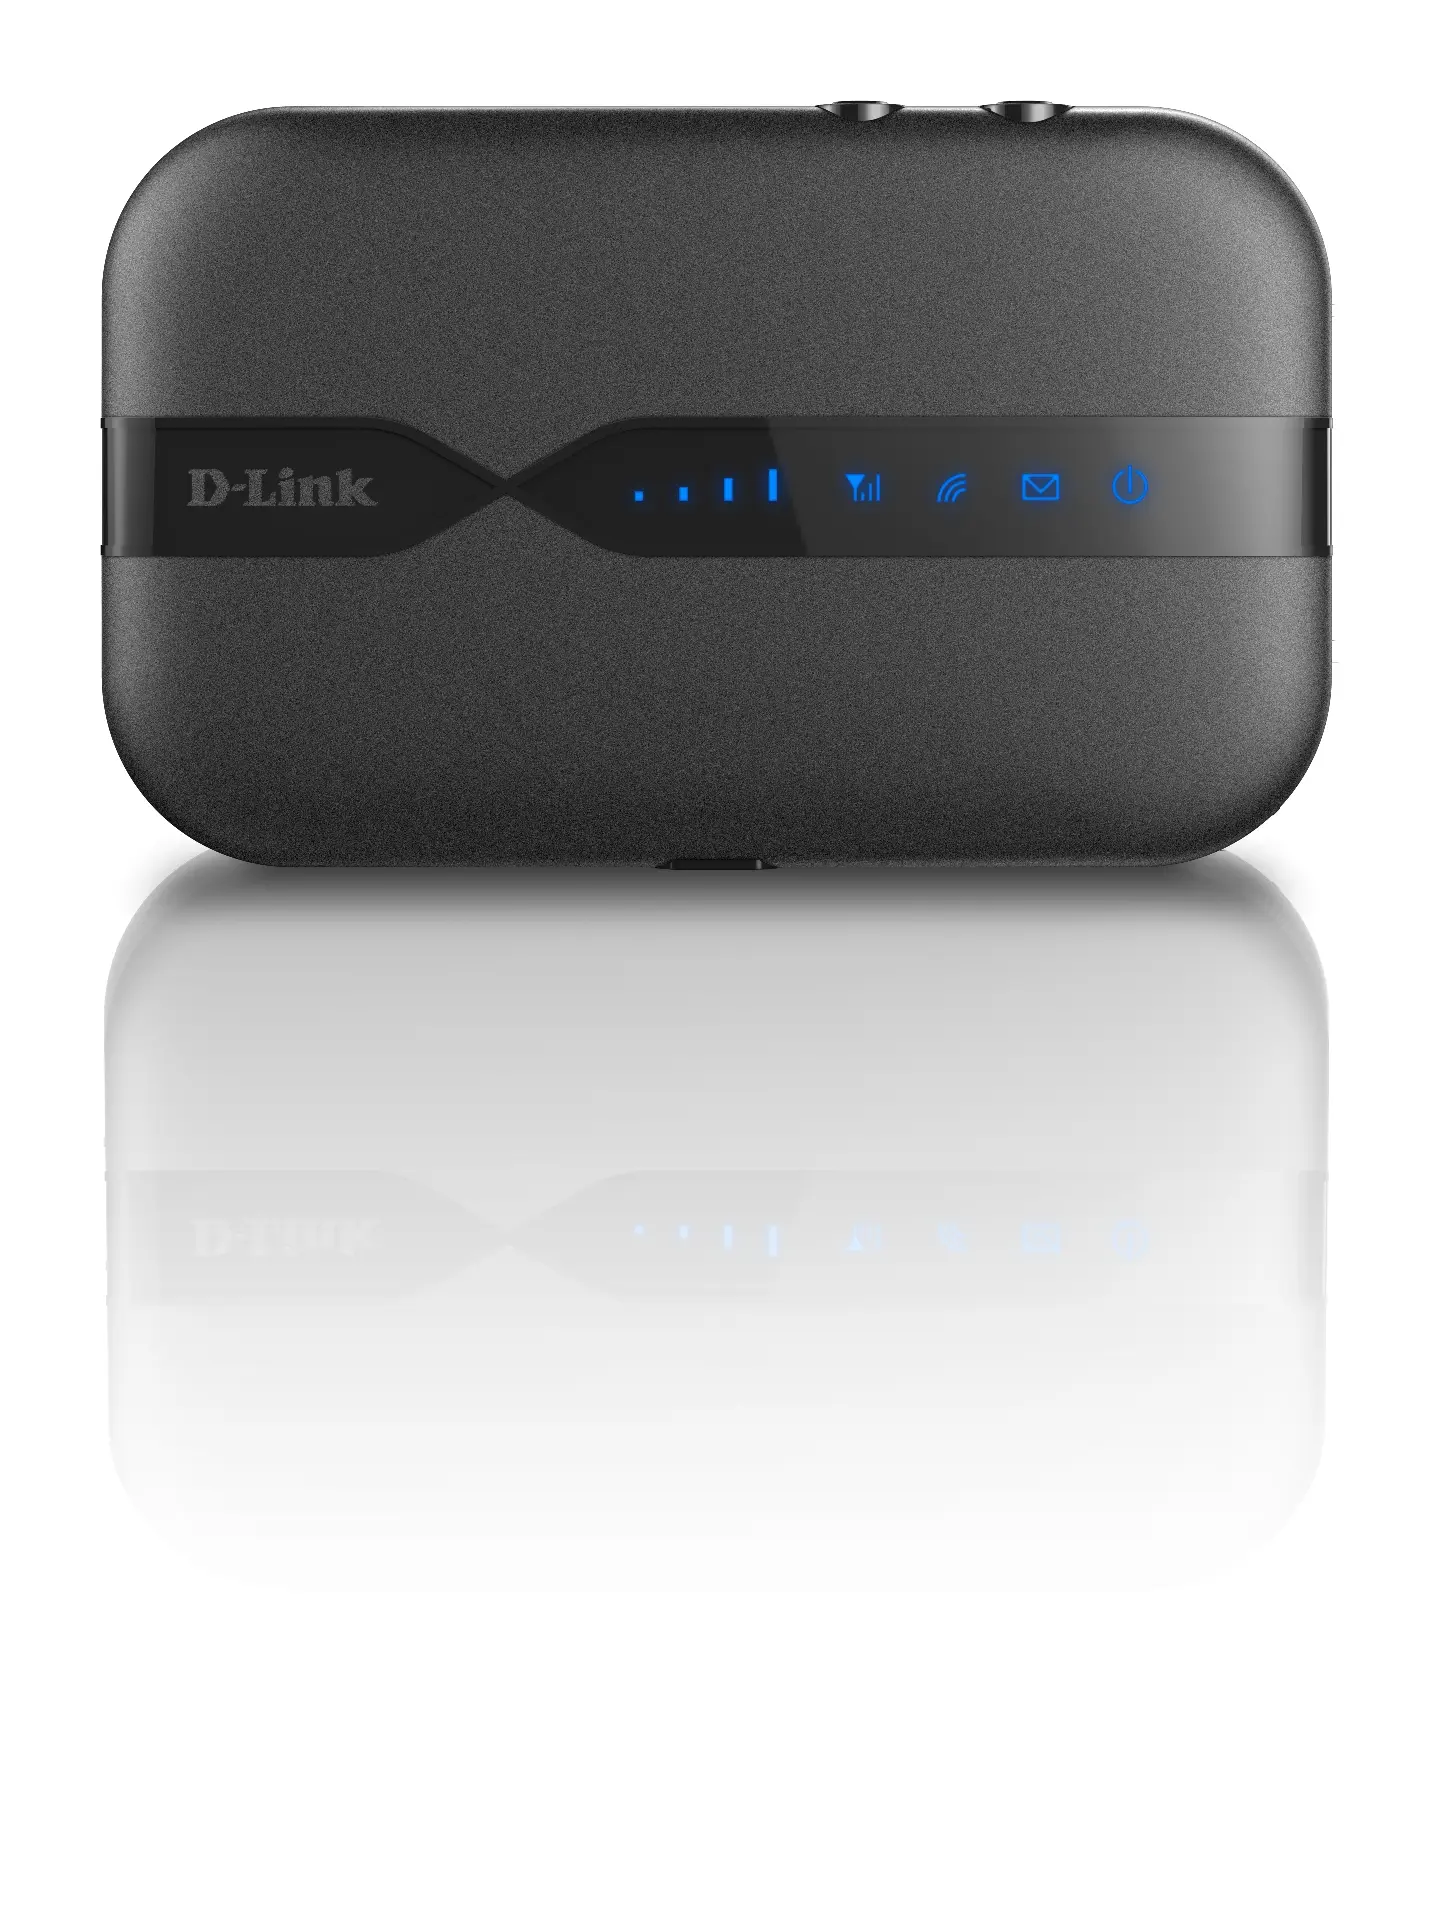 D-Link Punto de Acceso Hotspot WiFi Movil - Hasta 150 Mbps 4G LTE - Autonomia hasta 5h - Ranura para